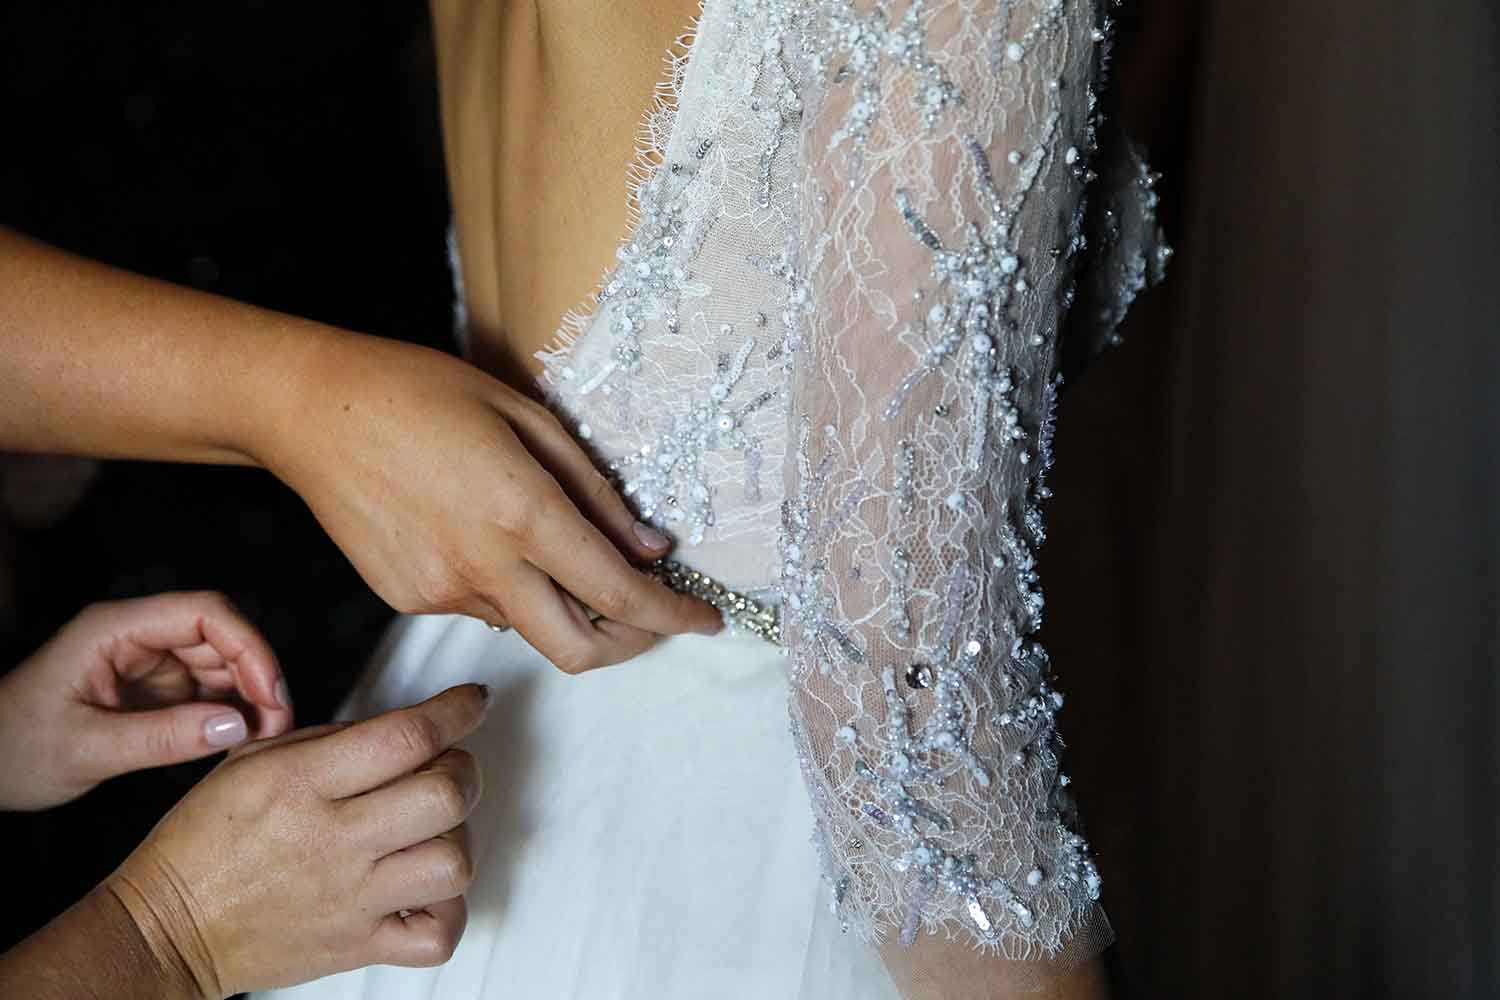 Detail from a wedding dress